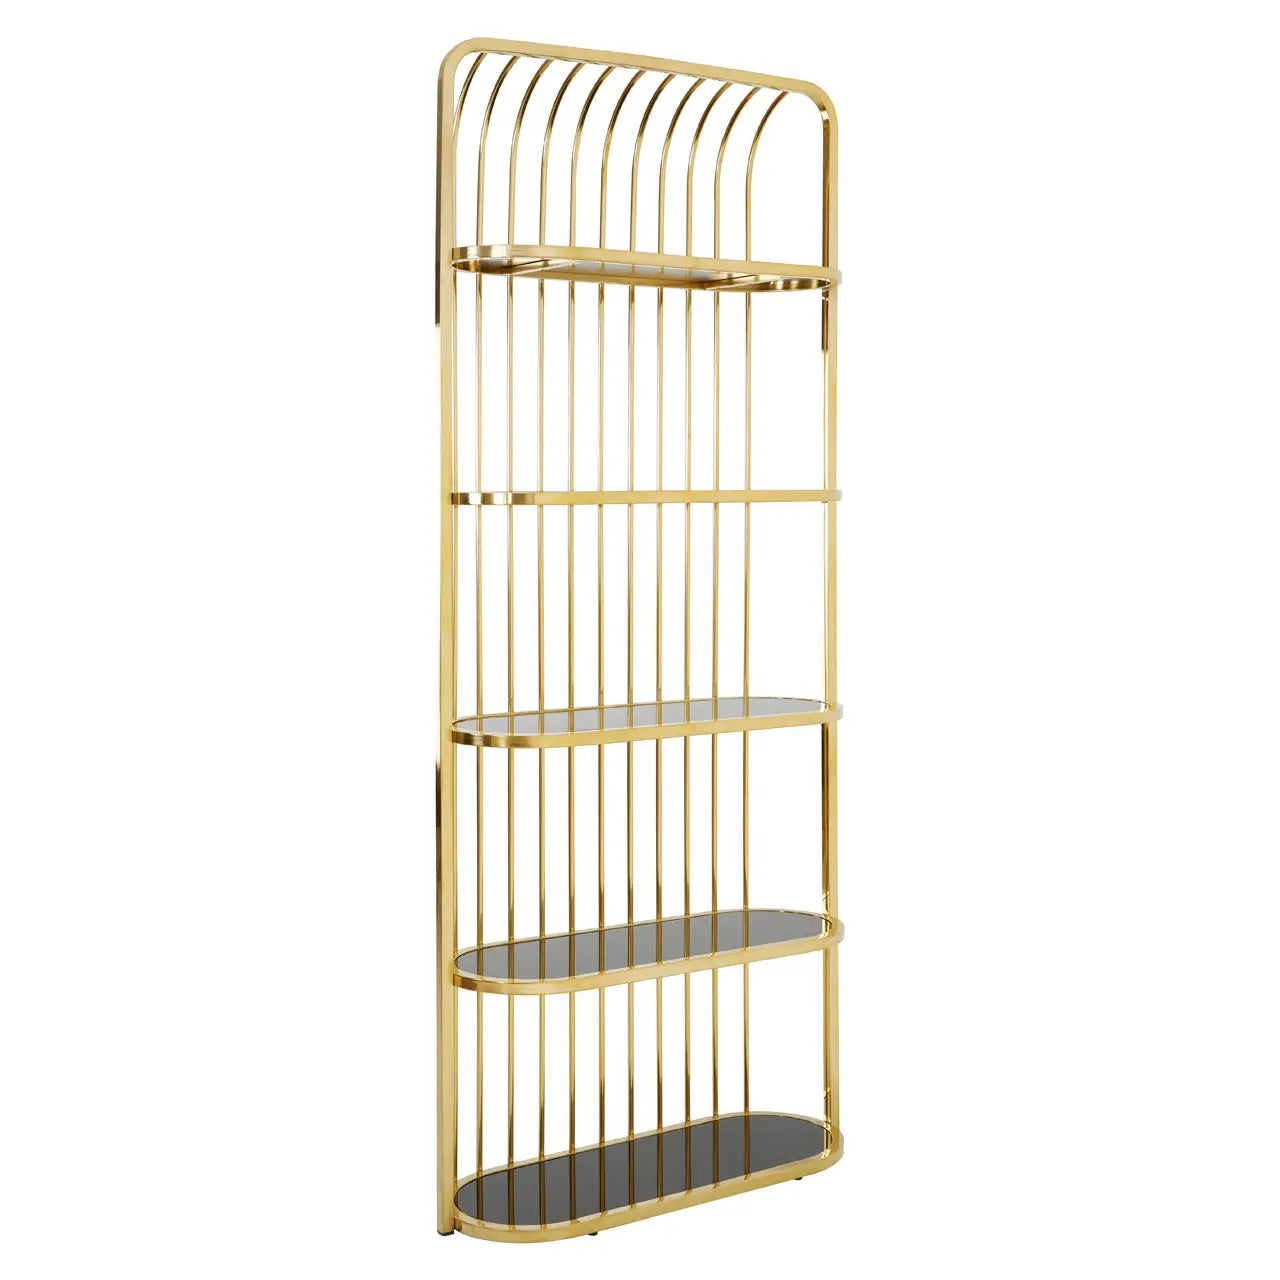 Horizon Gold Finish Cage Design Bookshelf